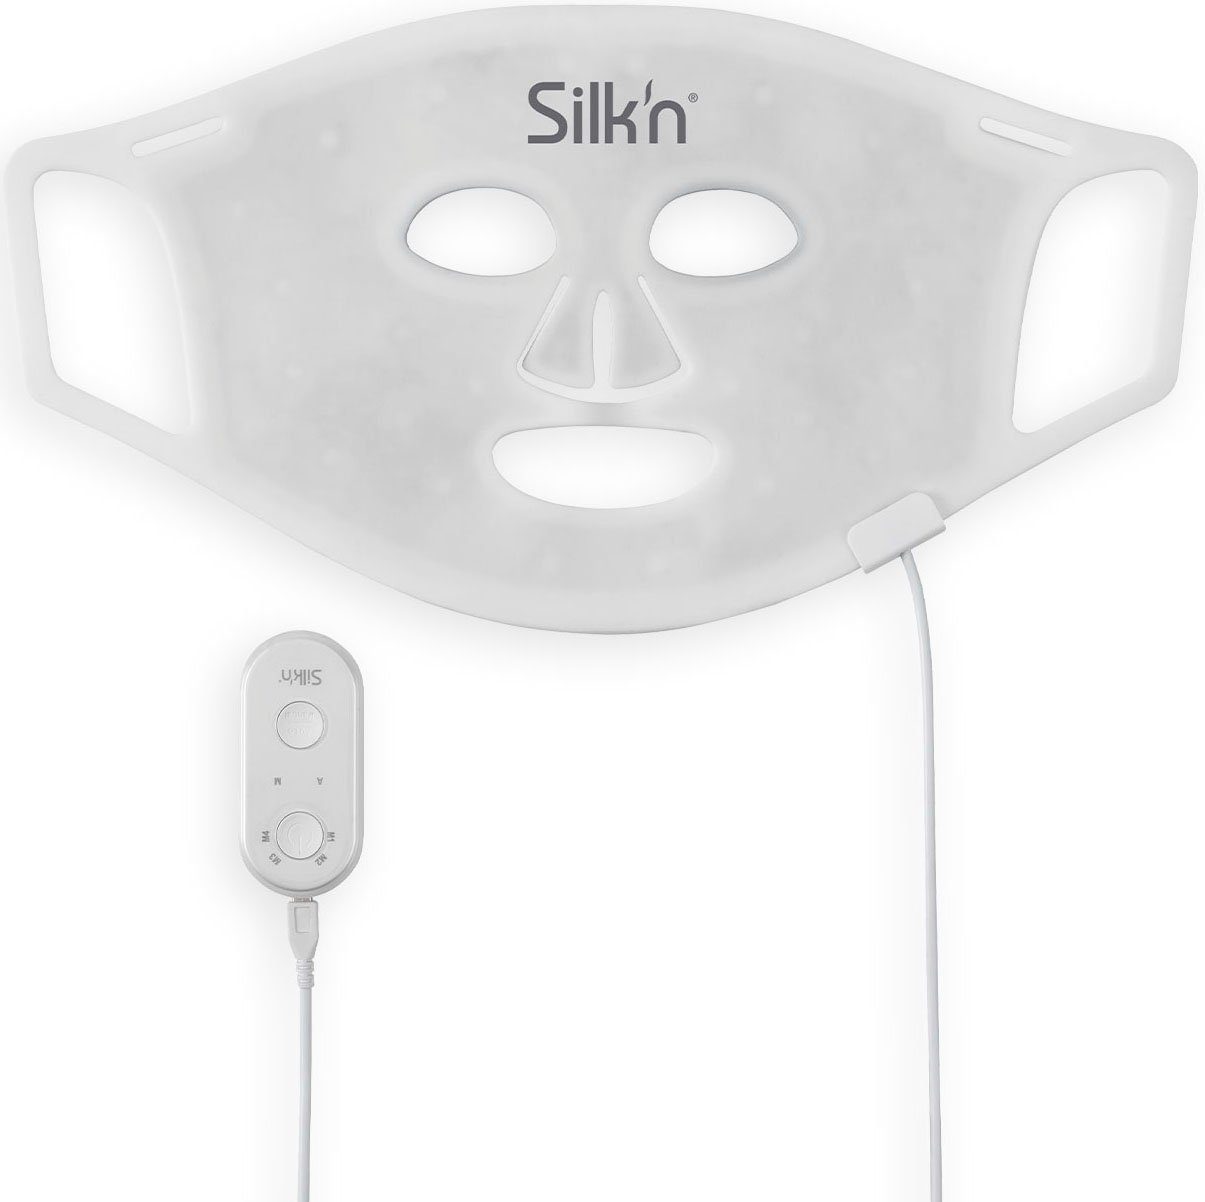 Silk'n Kosmetikbehandlungsgerät LED Face Mask Gesichtsmaske mit 4 100, LED Lichtfarben